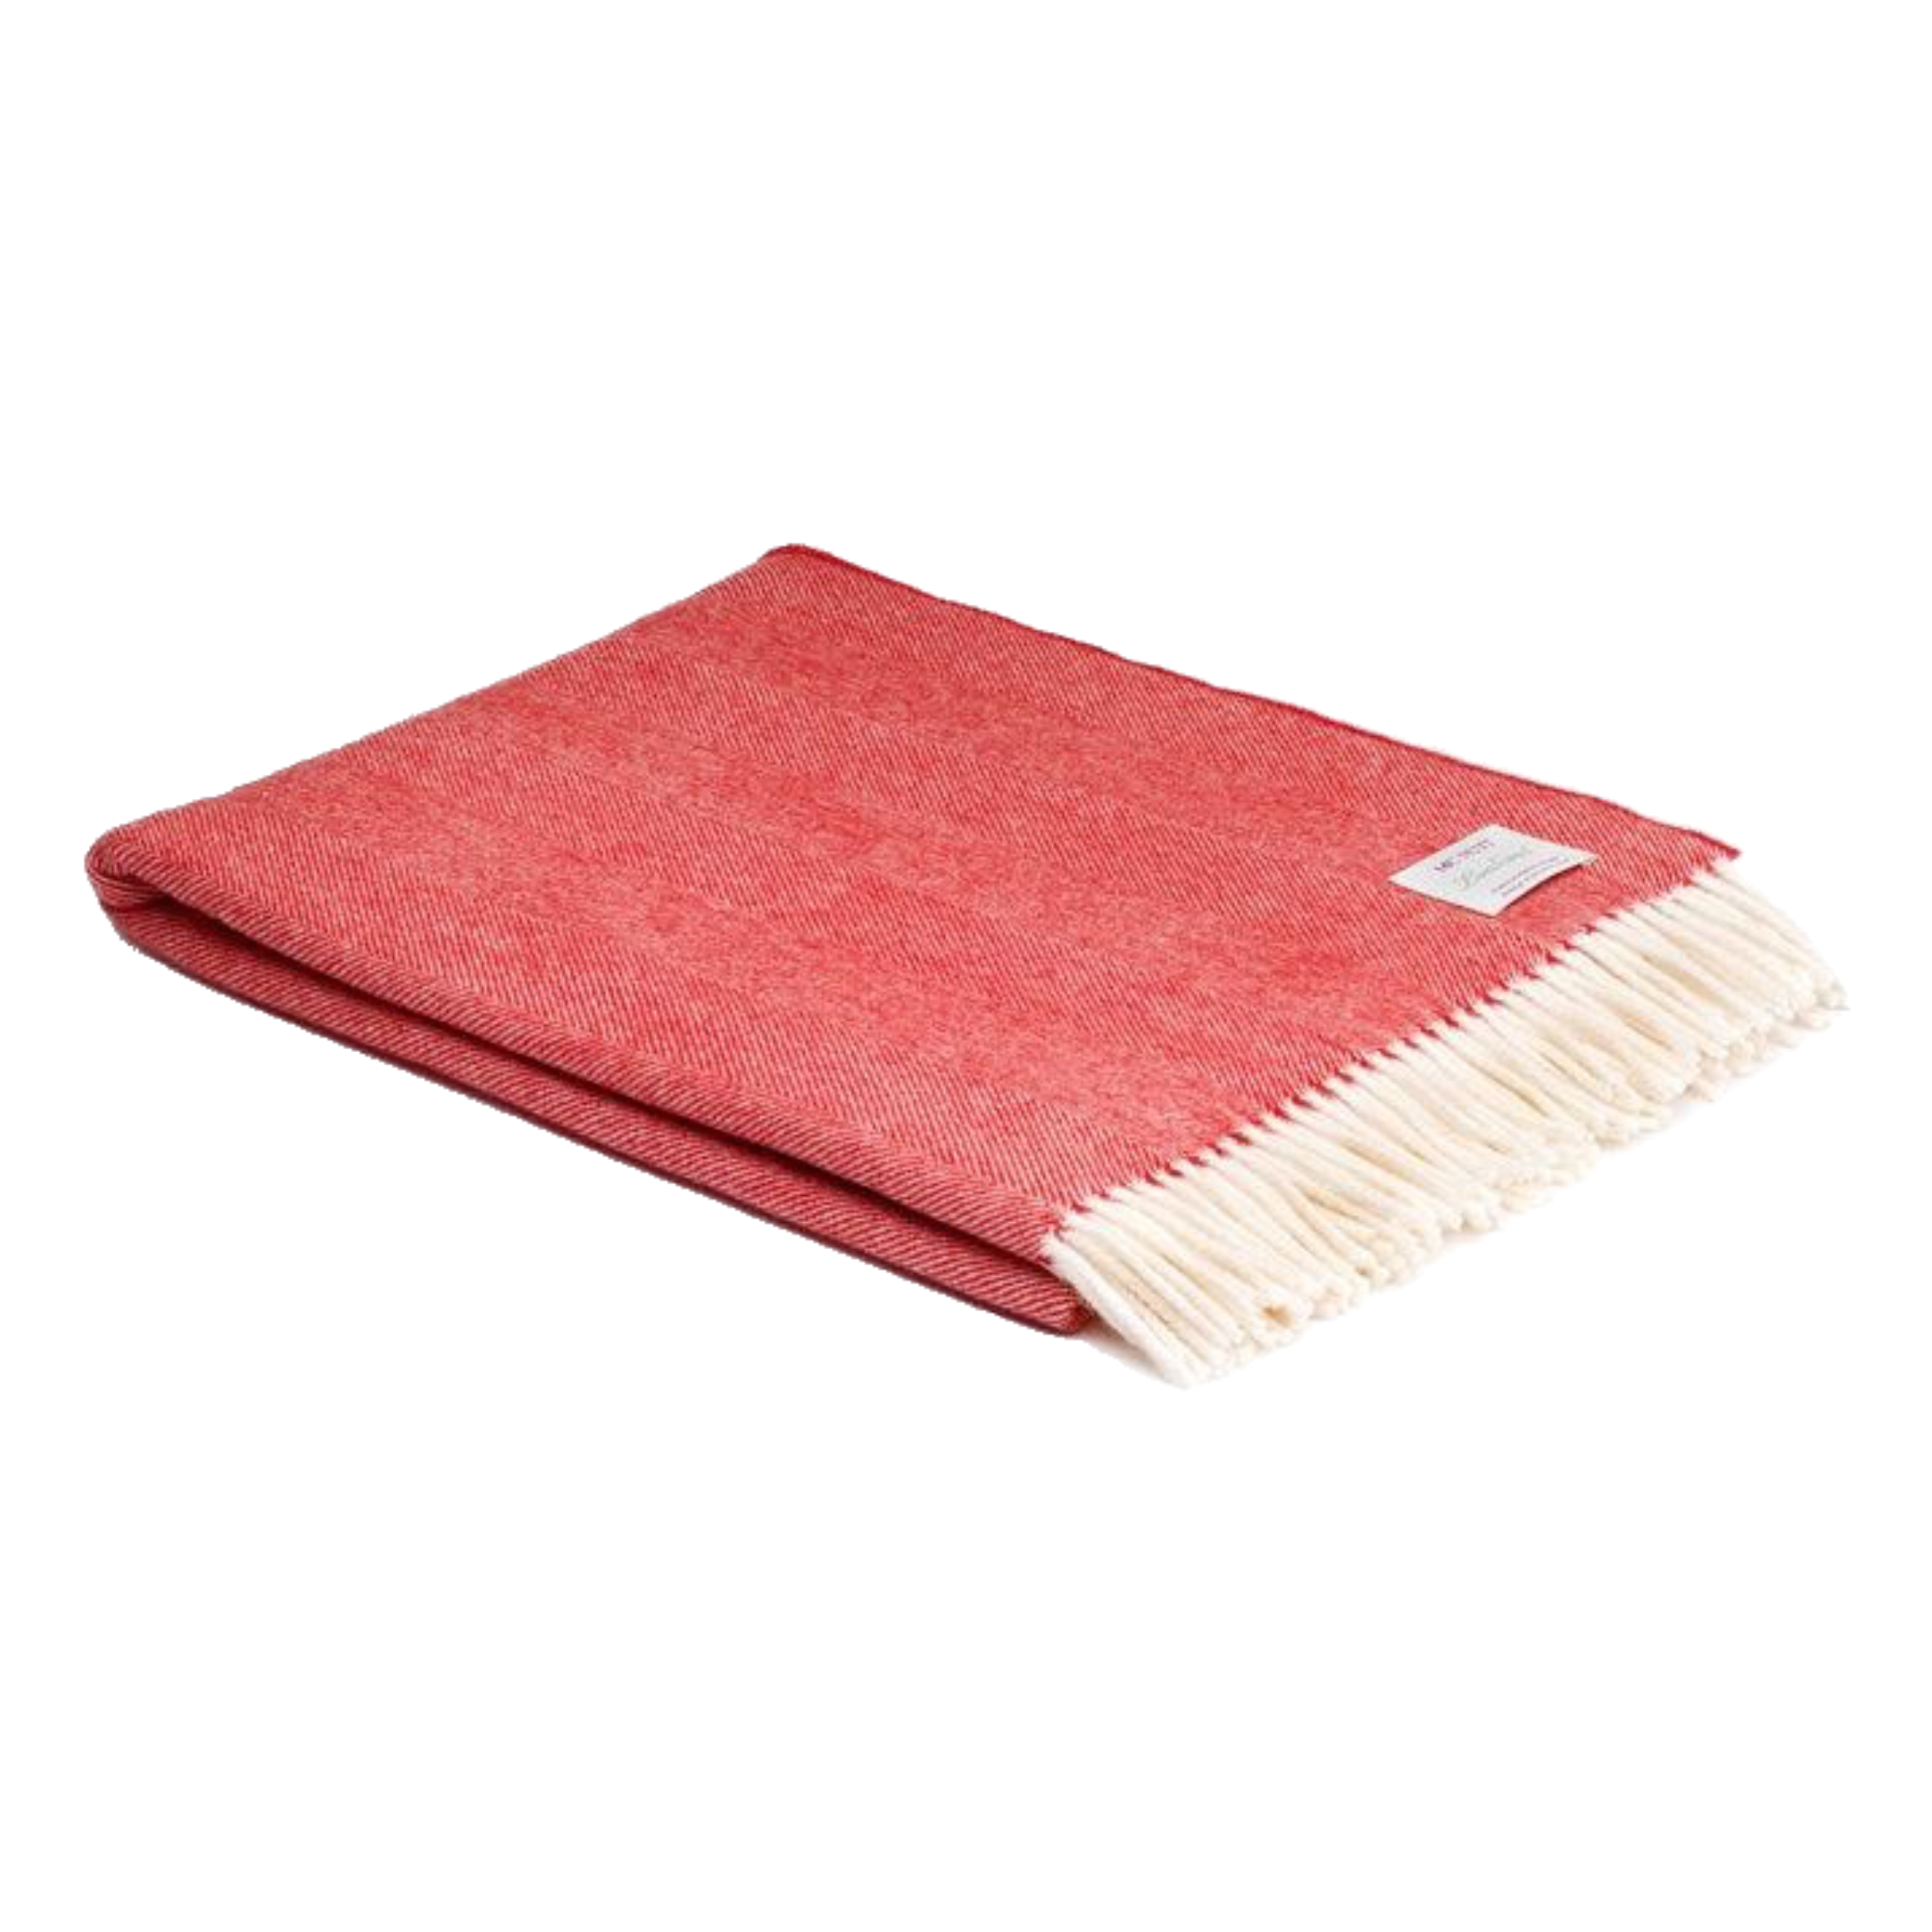 McNutt Red And Cream Herringbone Blanket